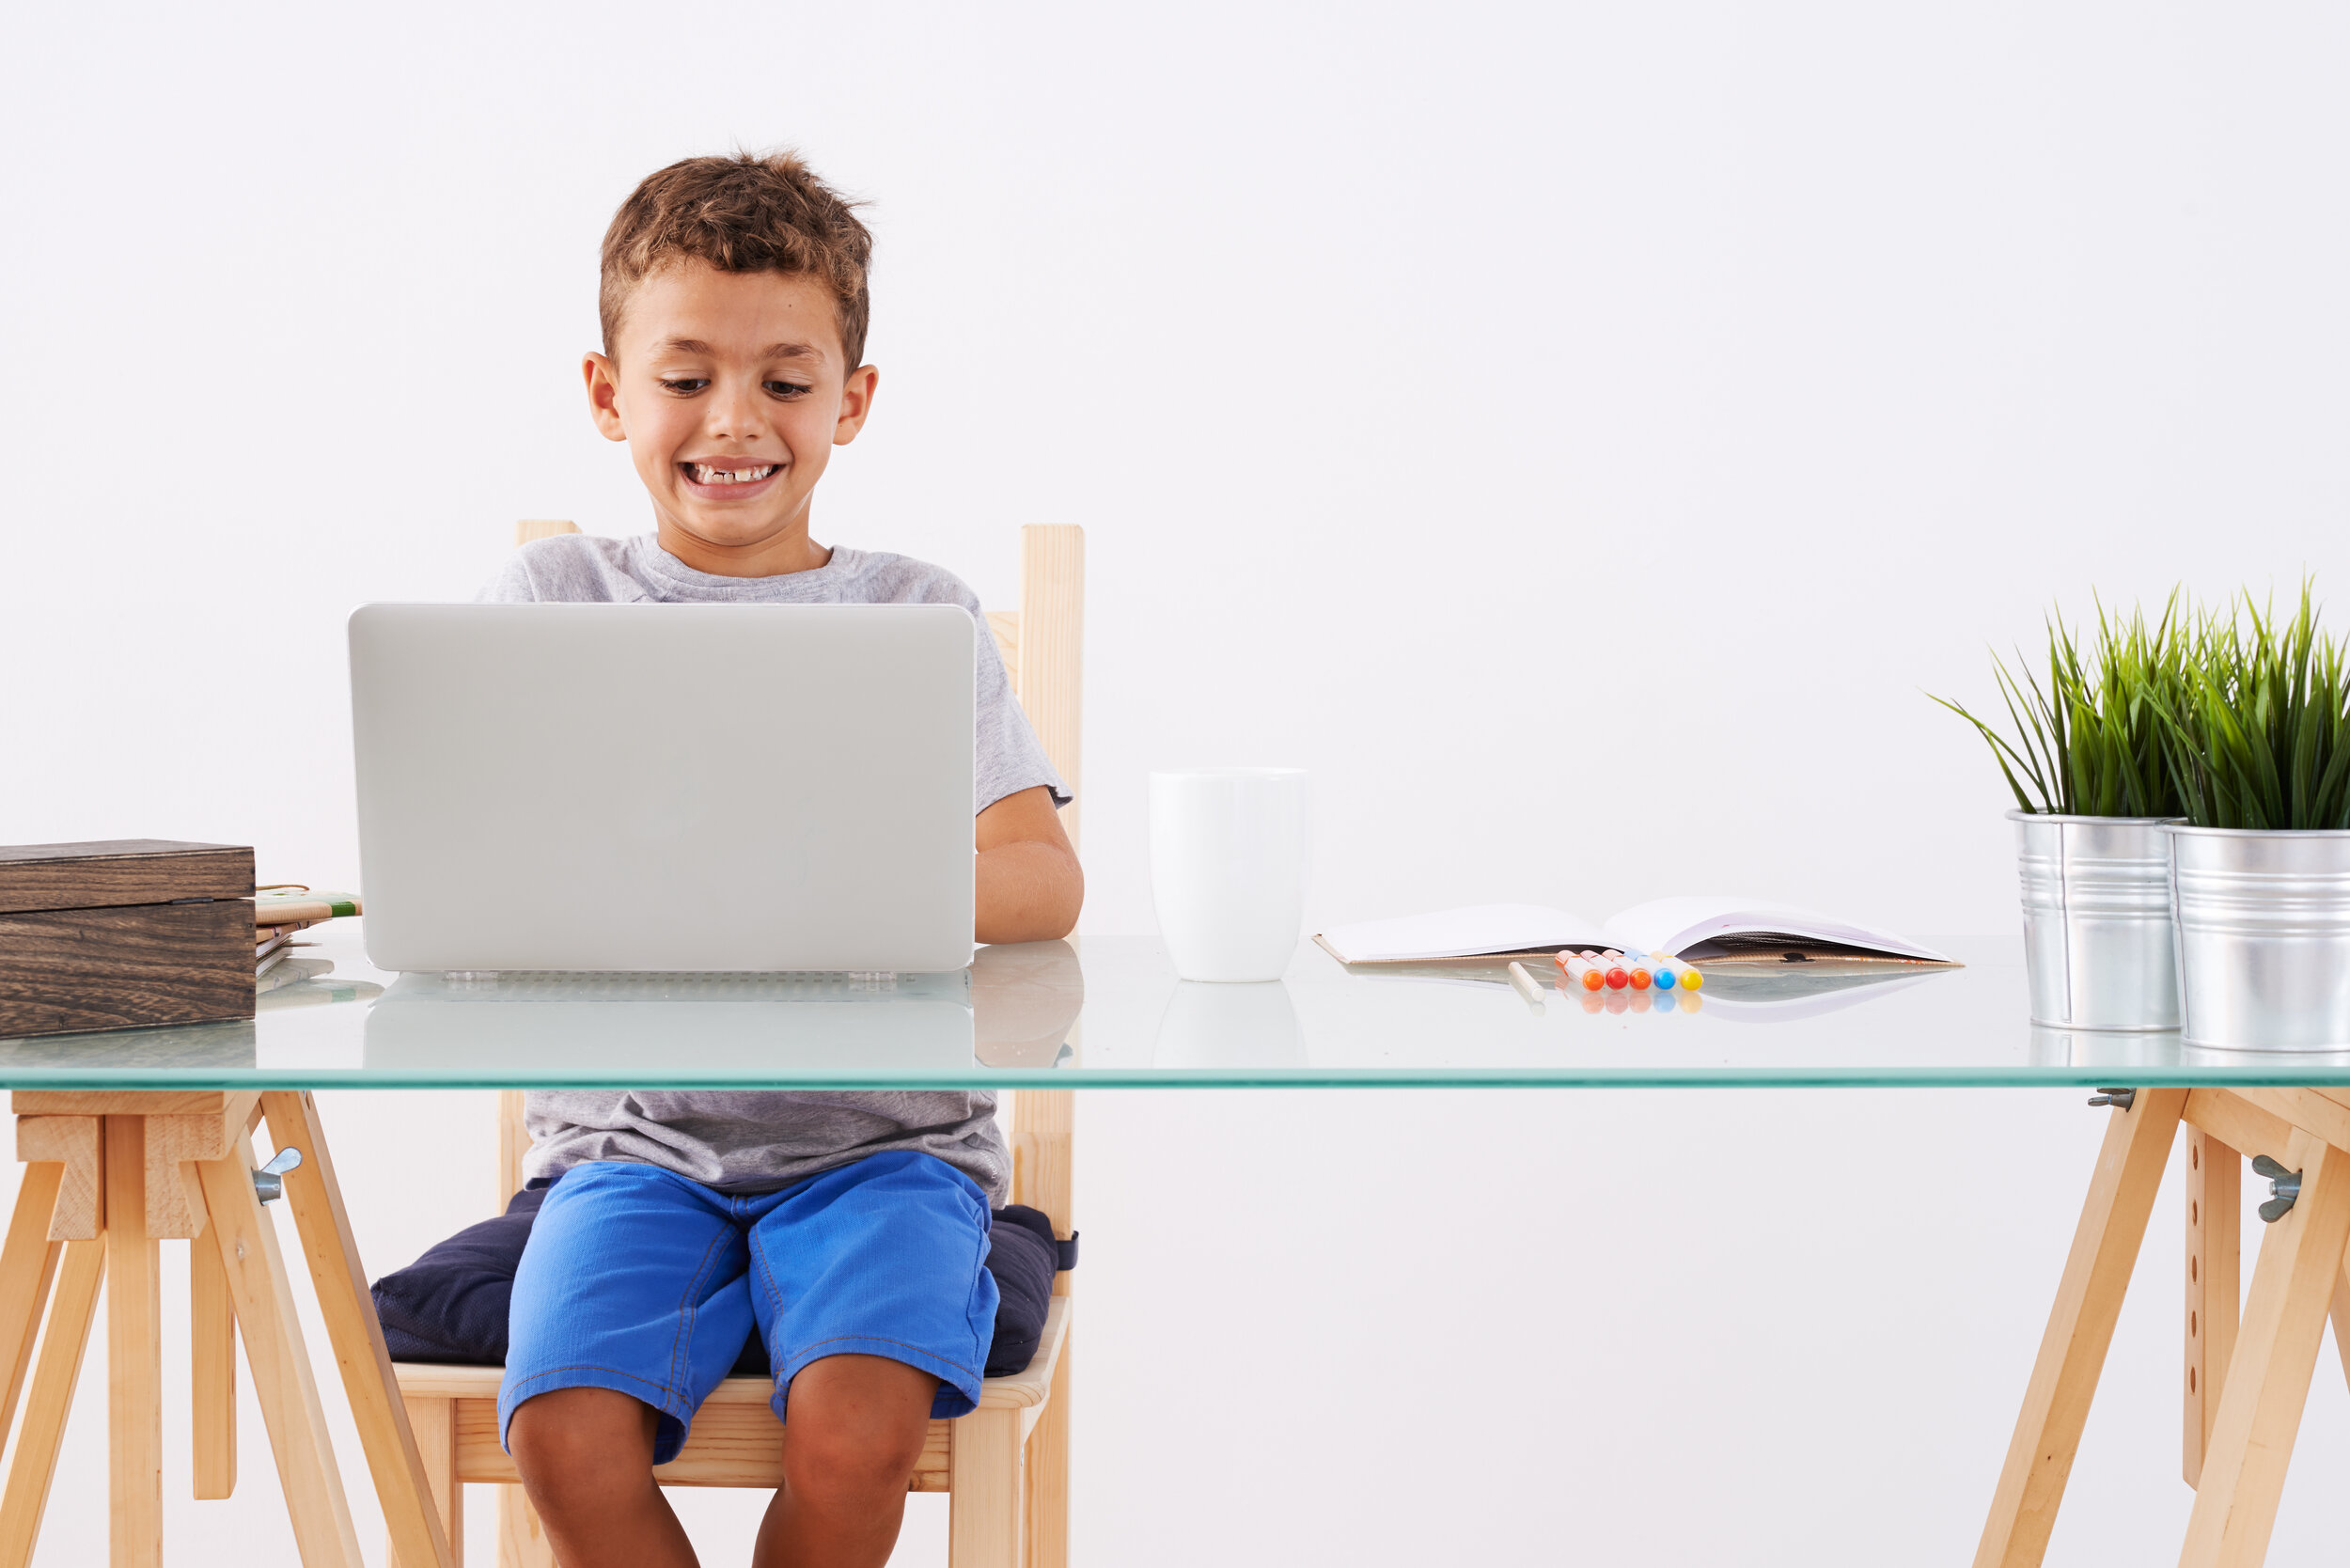 Reading players. Ребенок с ноутбуком. Мальчик с ноутбуком. Подросток с ноутбуком. Ребенок с ноутом стоит.